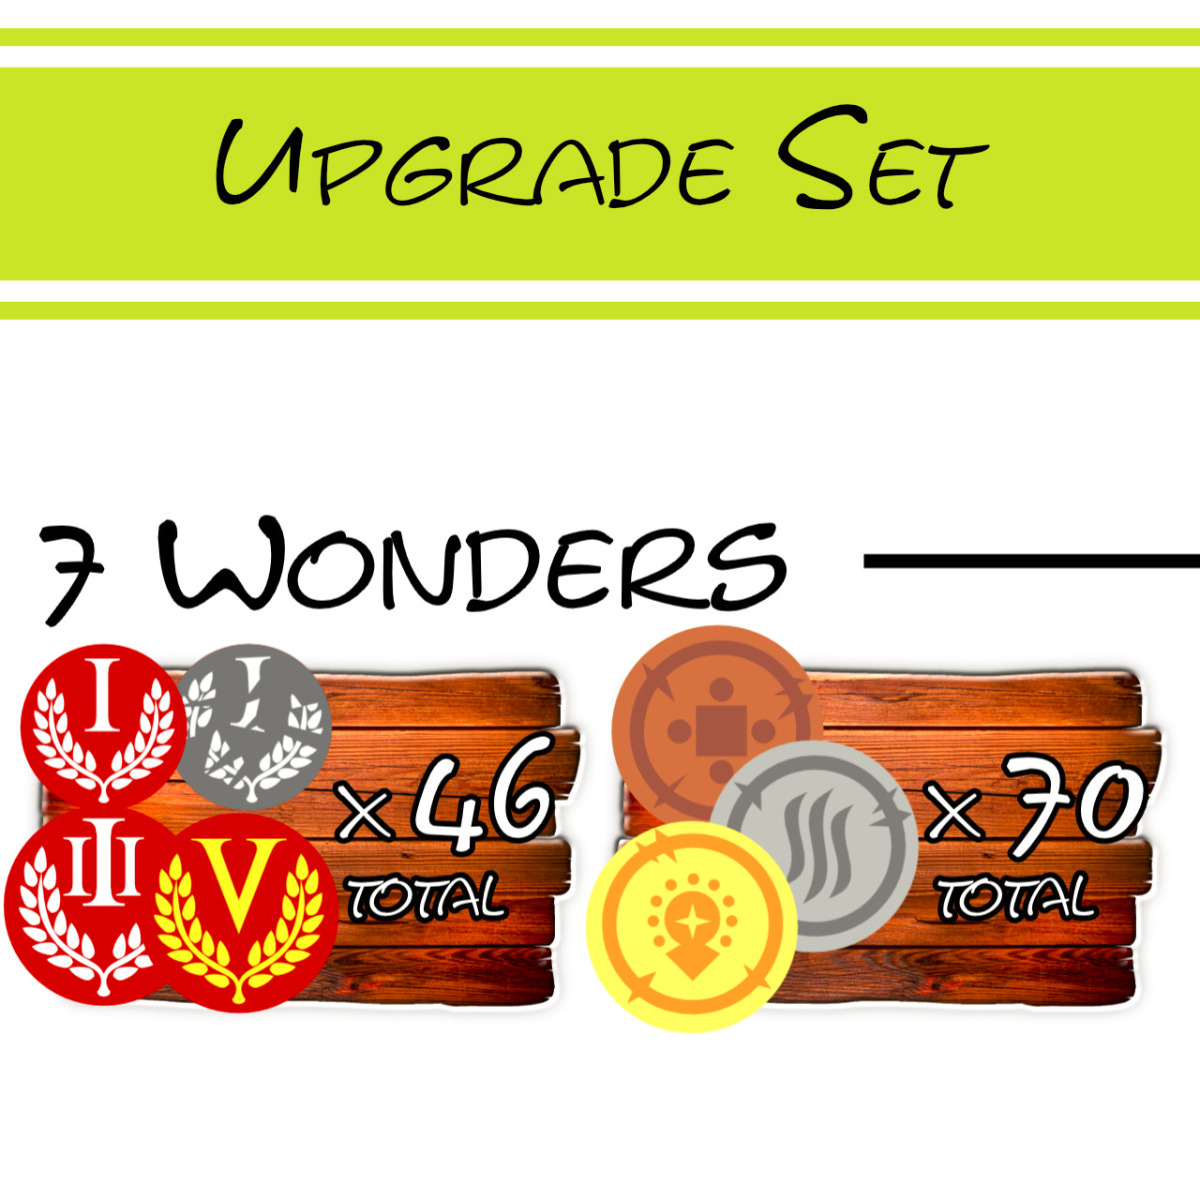 Upgrade 7 Wonders